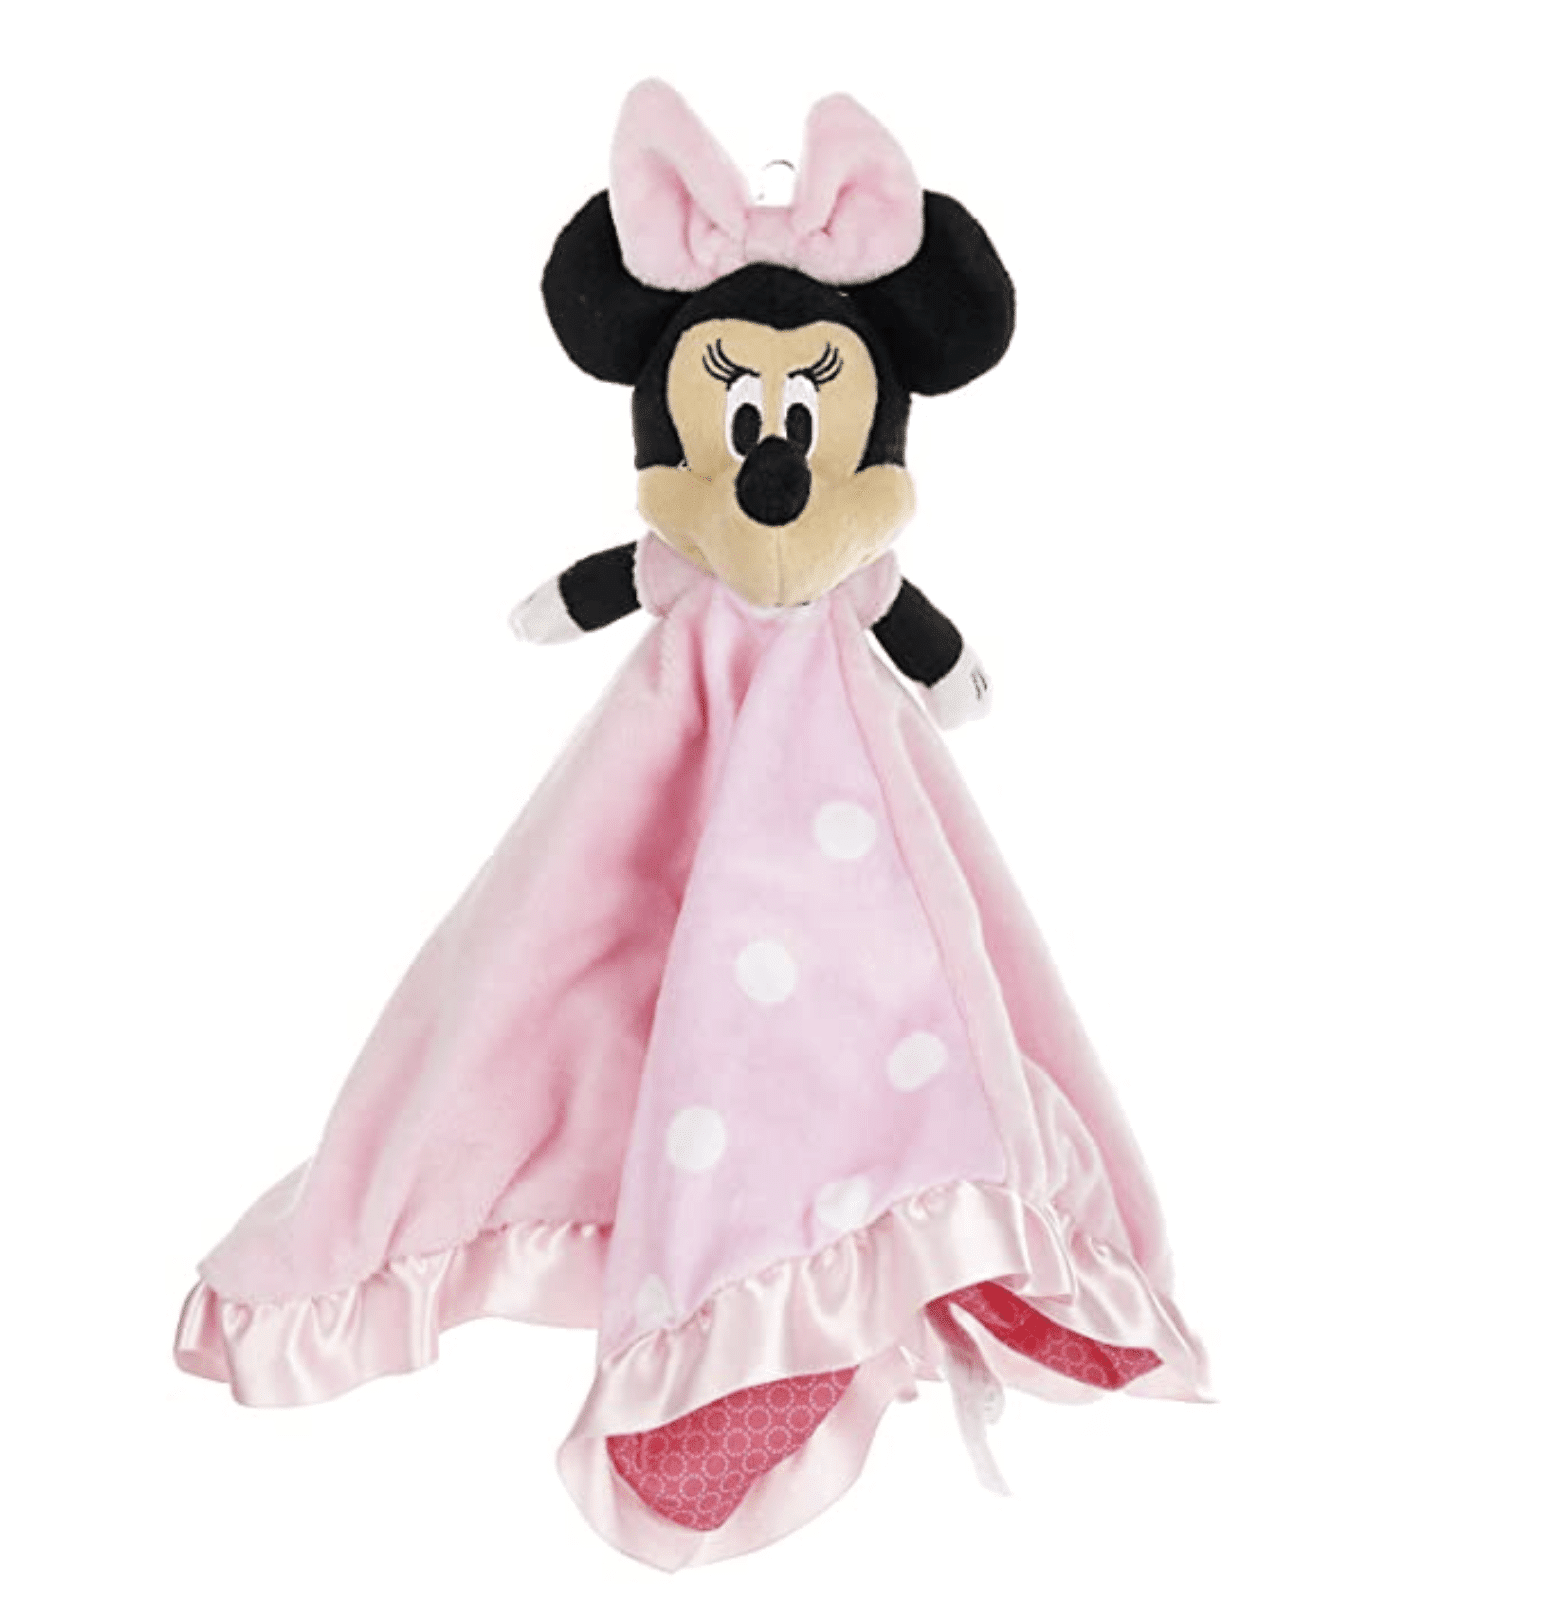 Disney Baby Minnie Mouse Plush Stuffed Animal Snuggler Blanket